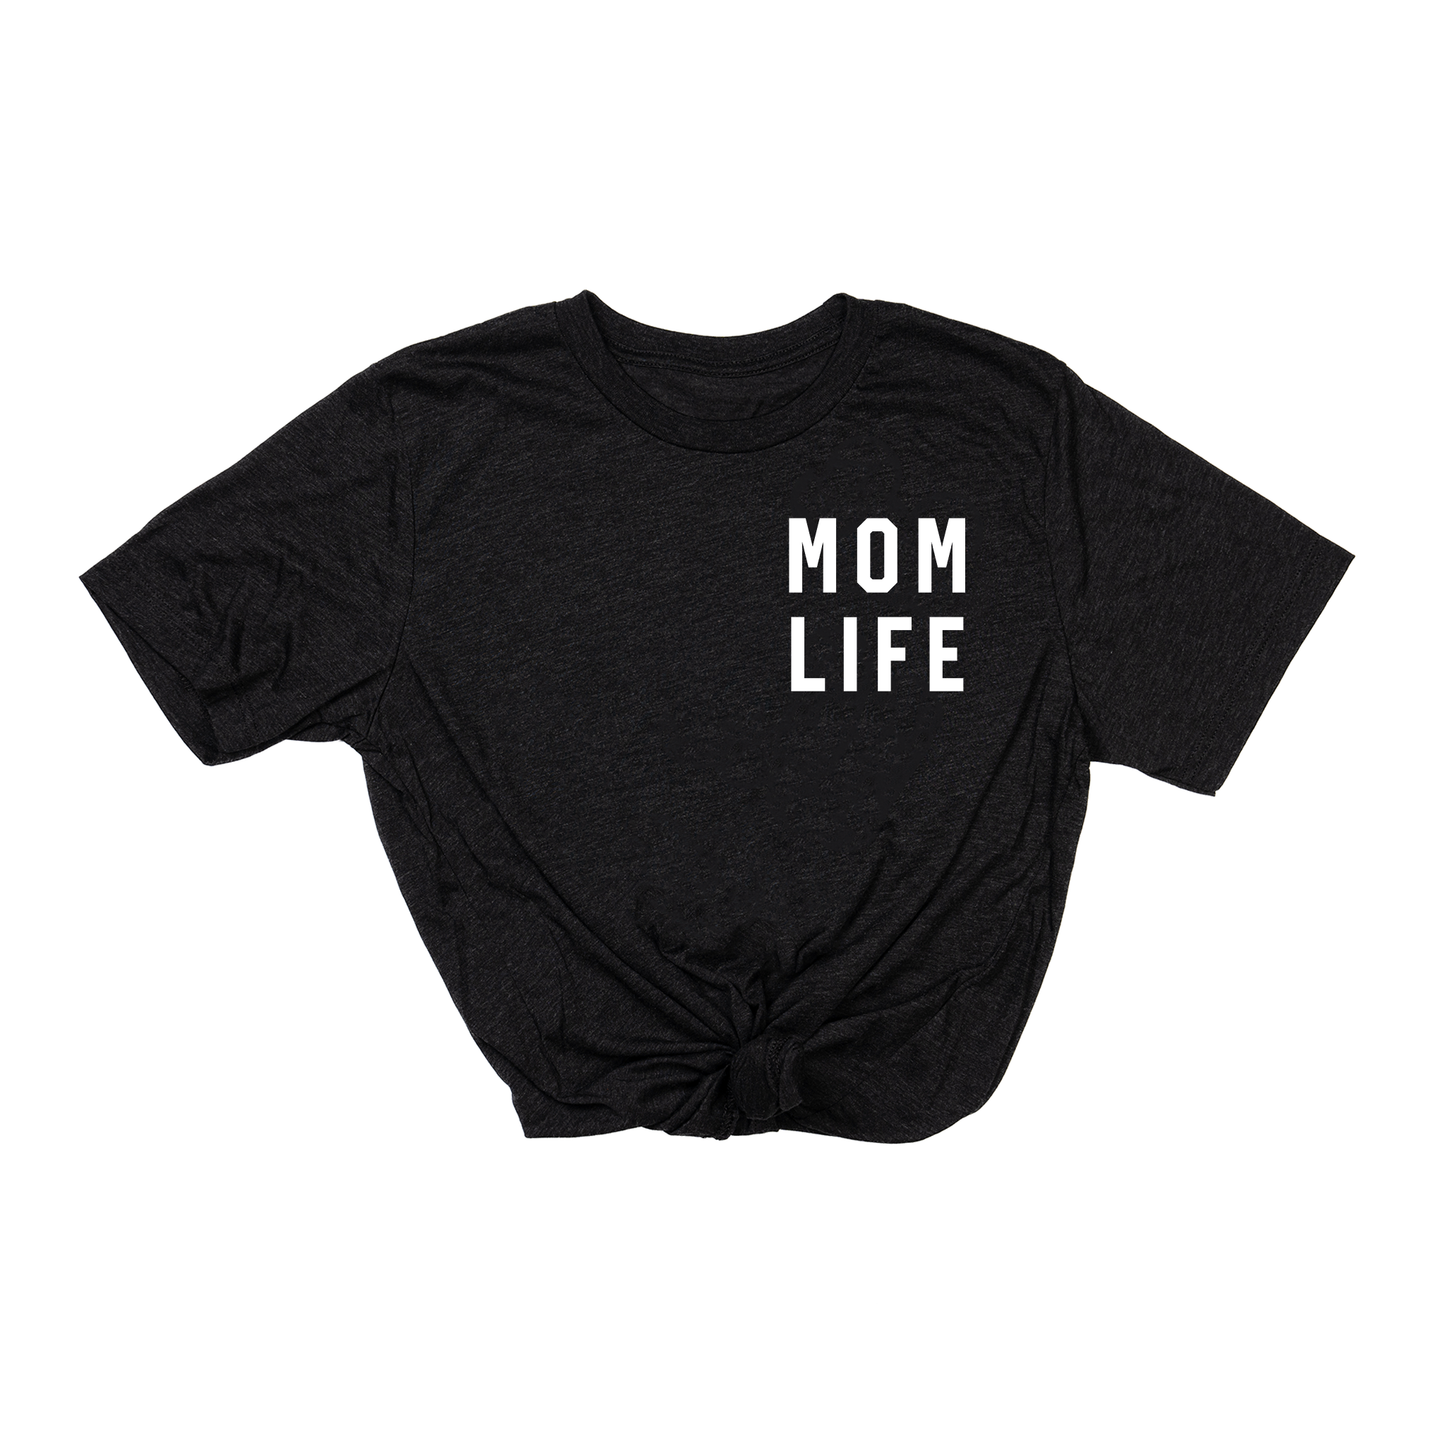 Mom Life (Pocket, White) - Tee (Charcoal Black)